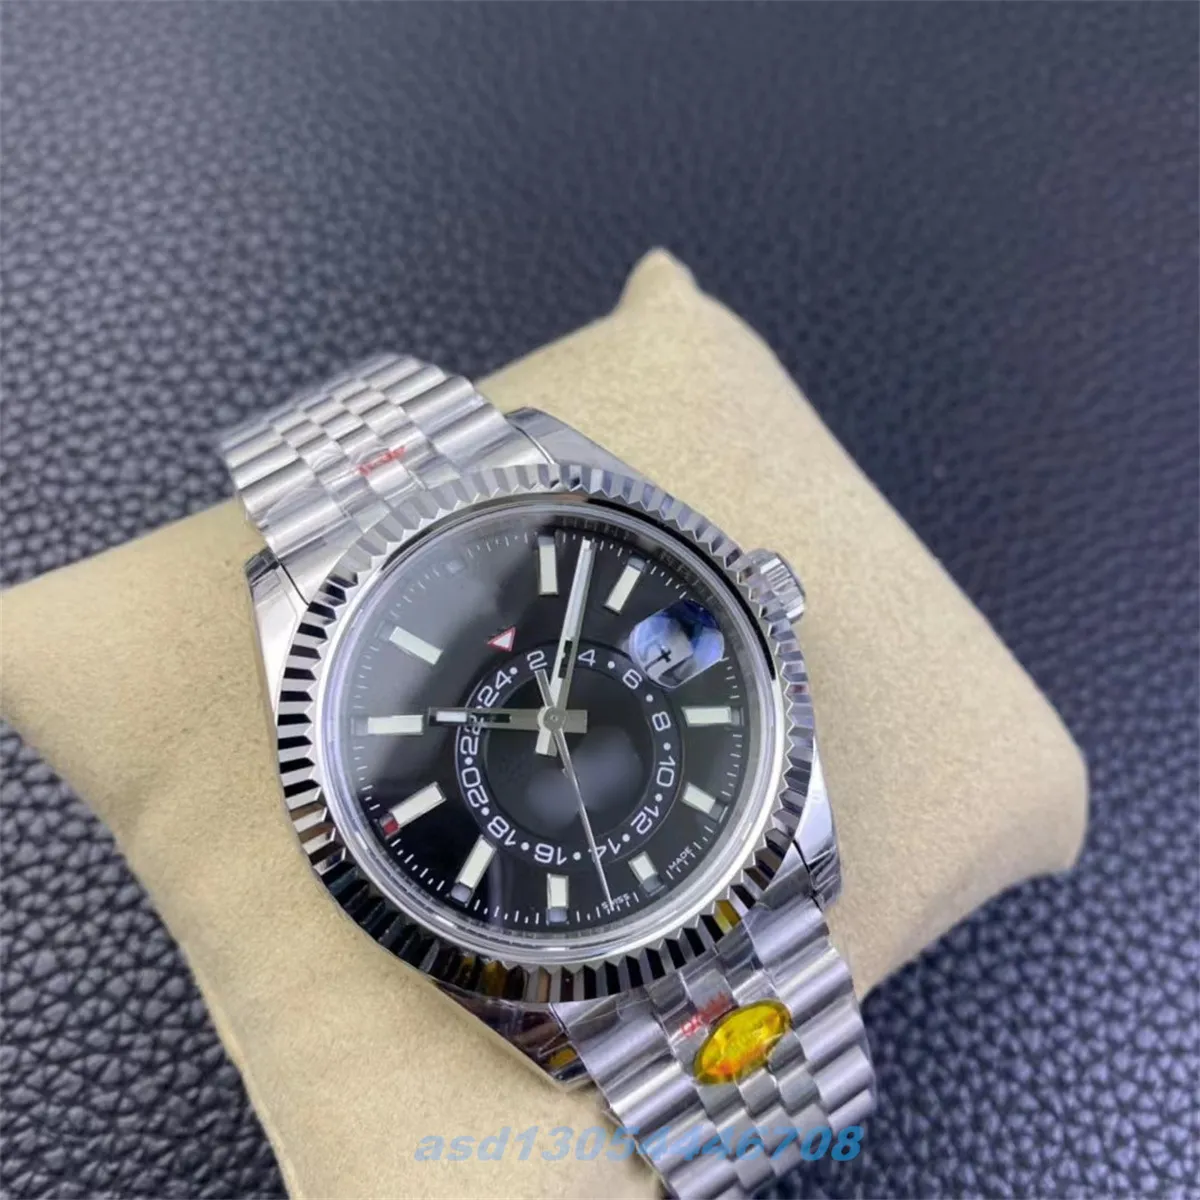 Men's watch 9001 Movement Size 42mm*14.3mm ice blue luminous 904L vibration frequency 21800 per hour sapphire mirror